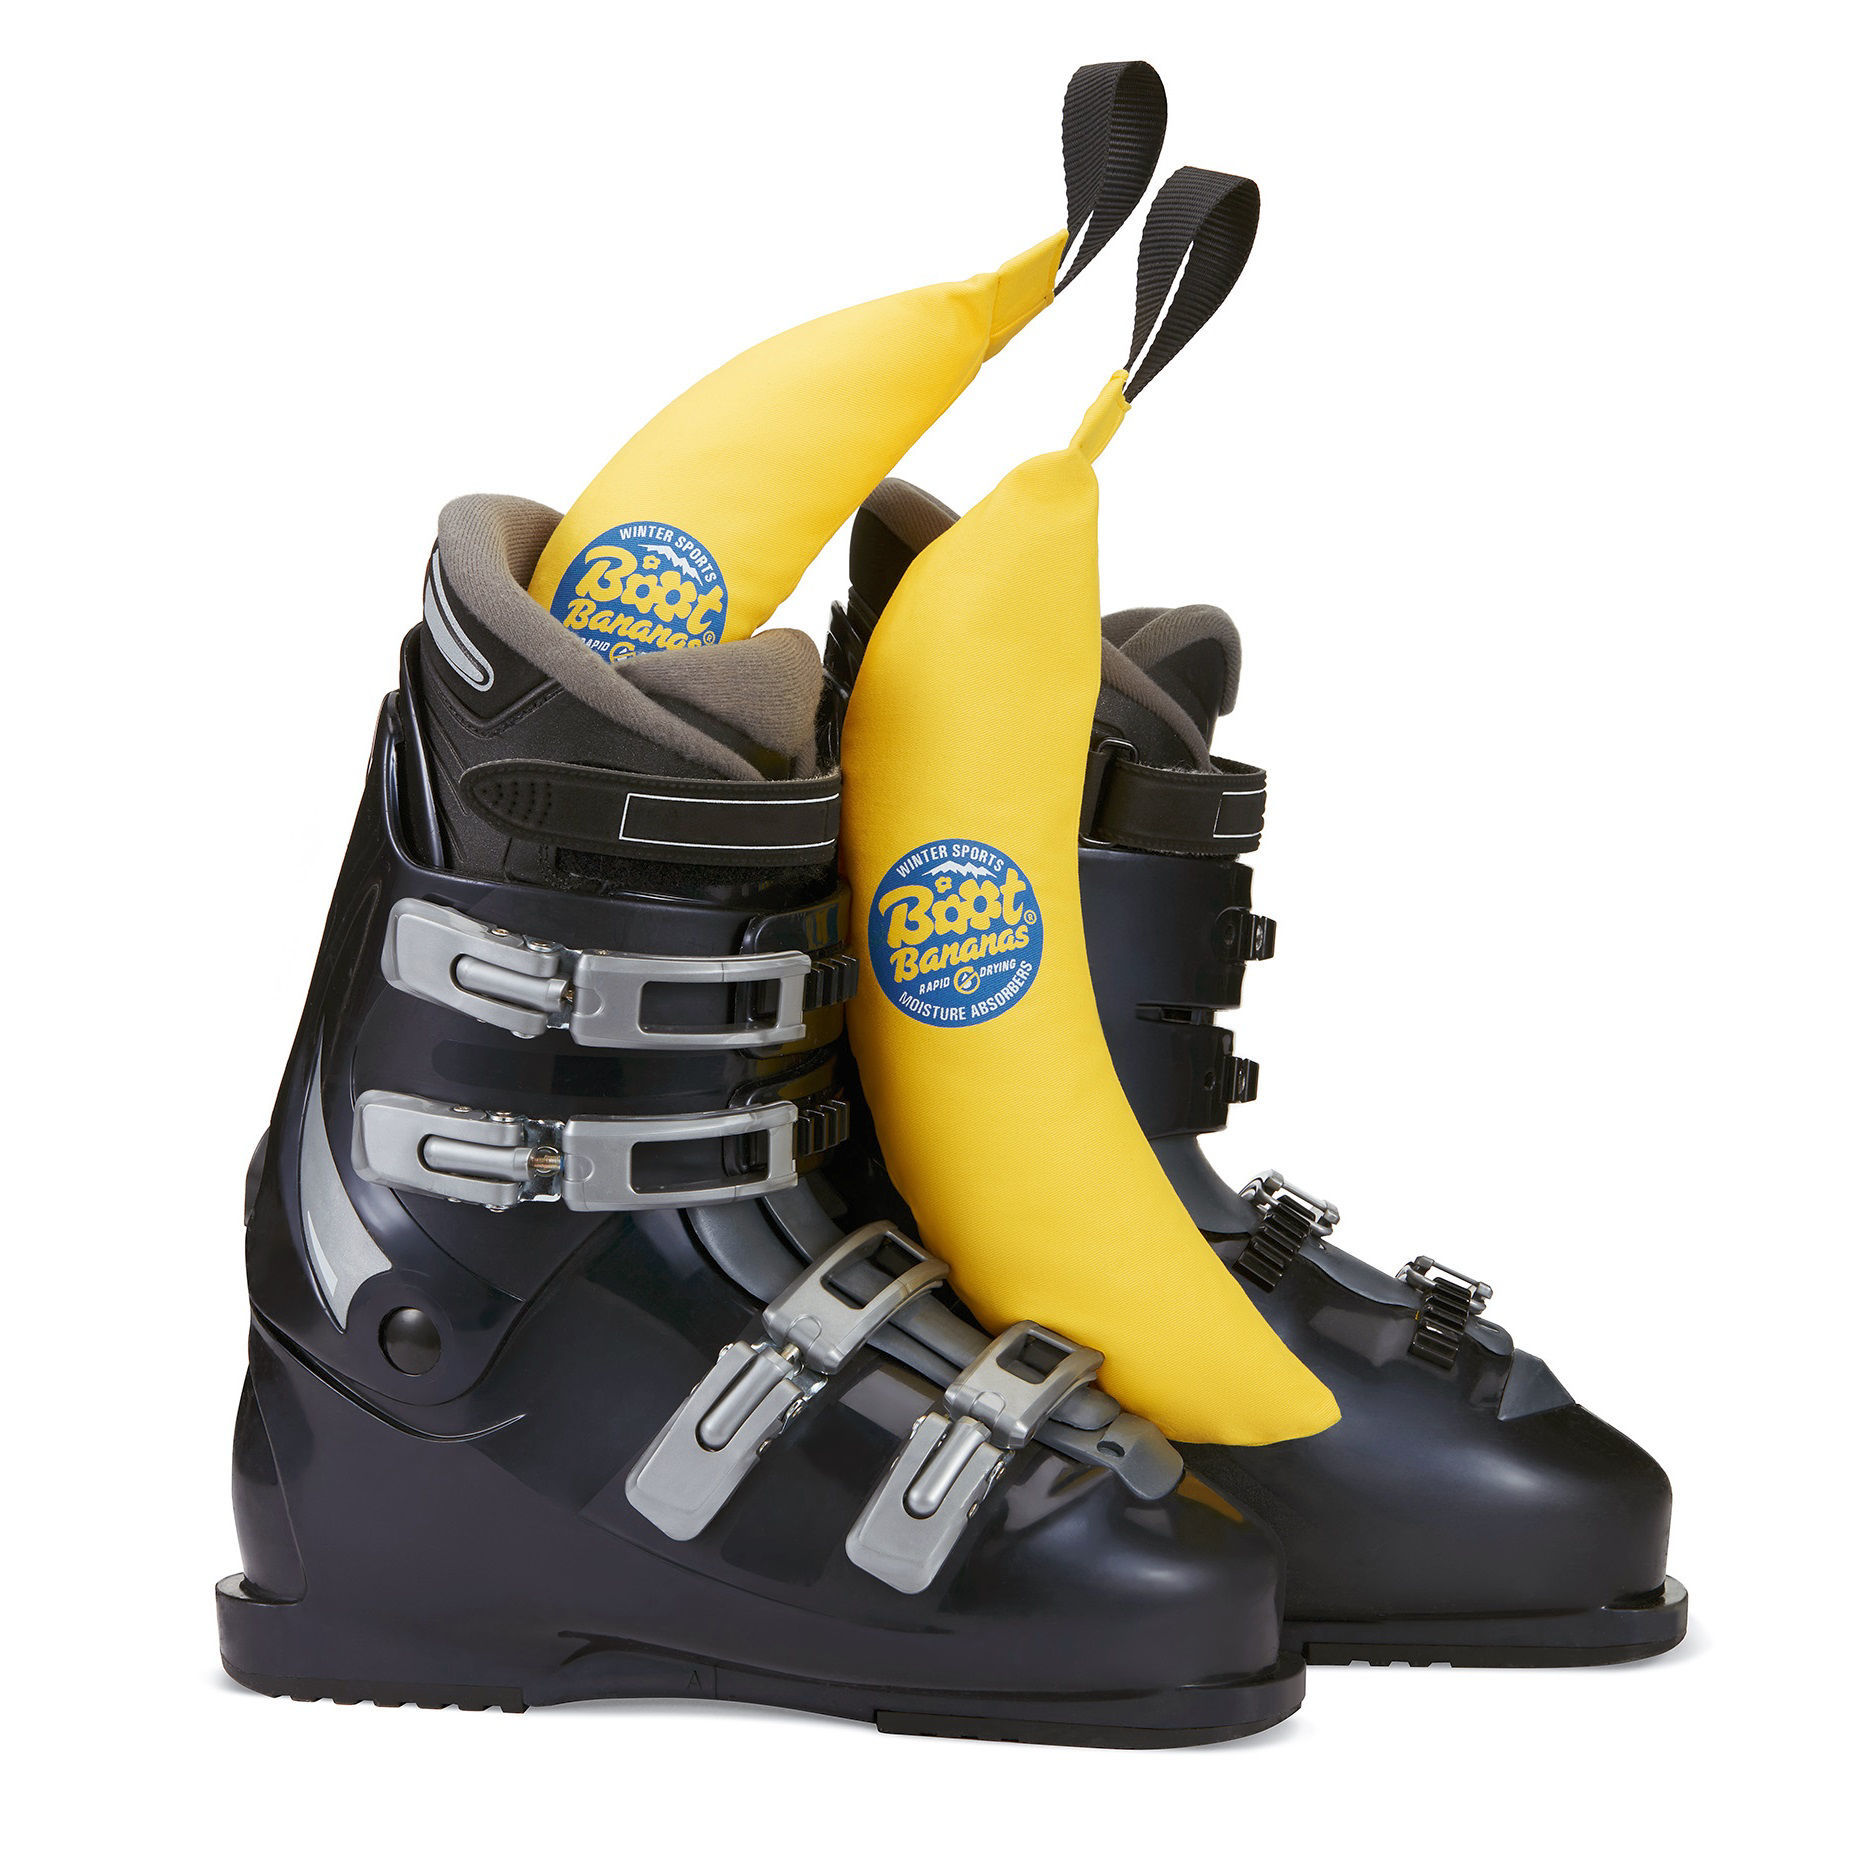 Boot Bananas Boot Bananas Winter Sport